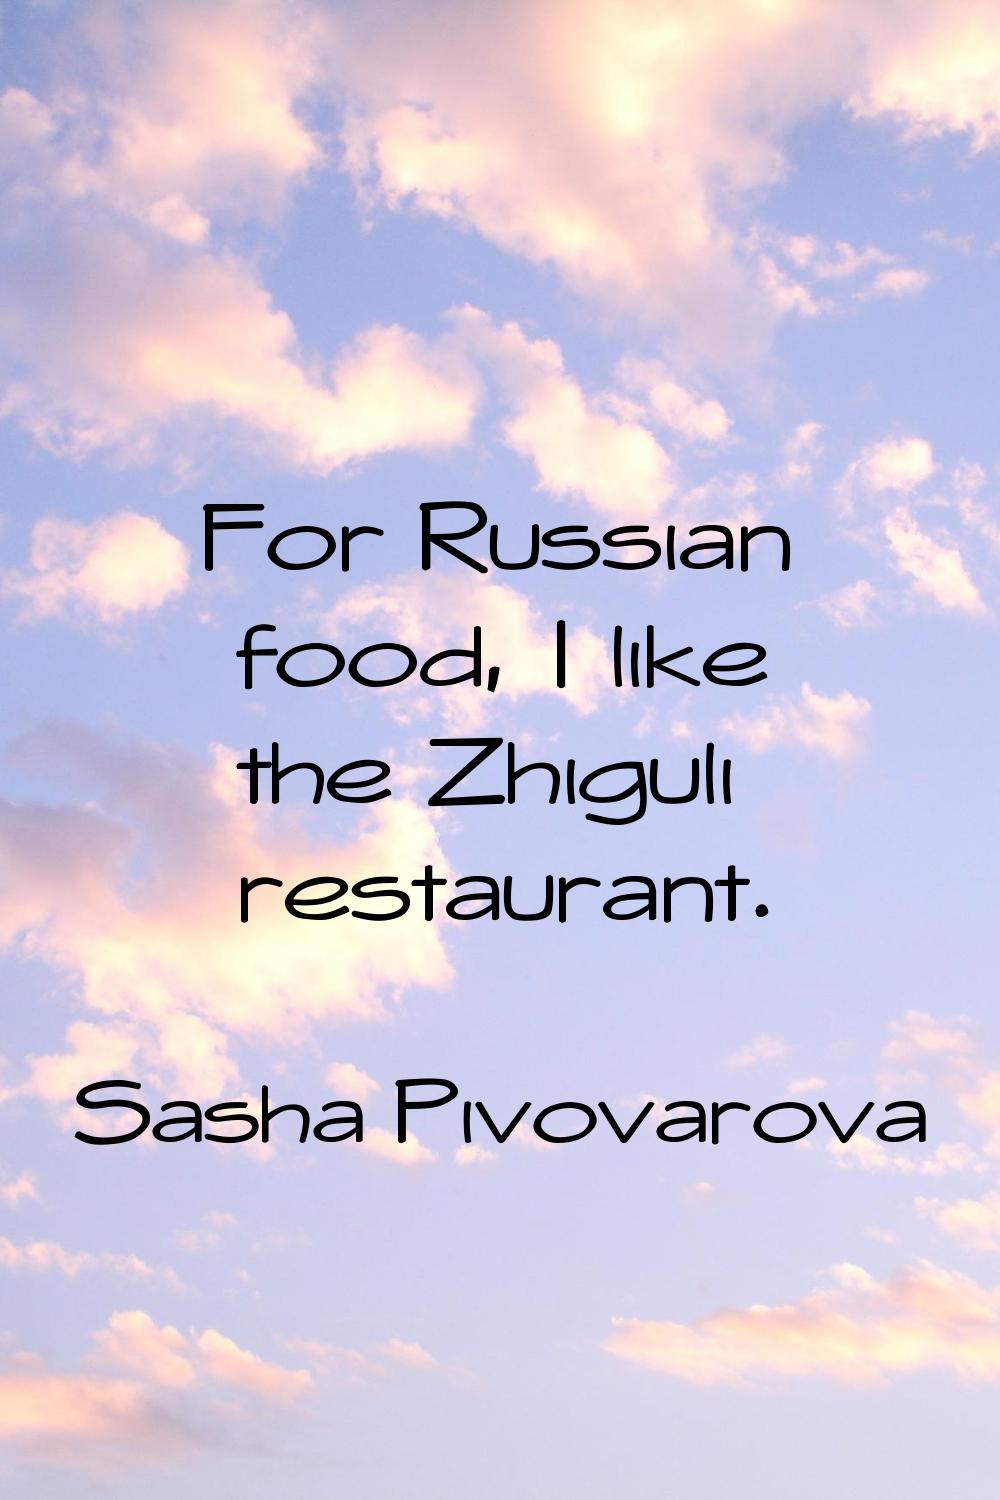 For Russian food, I like the Zhiguli restaurant.